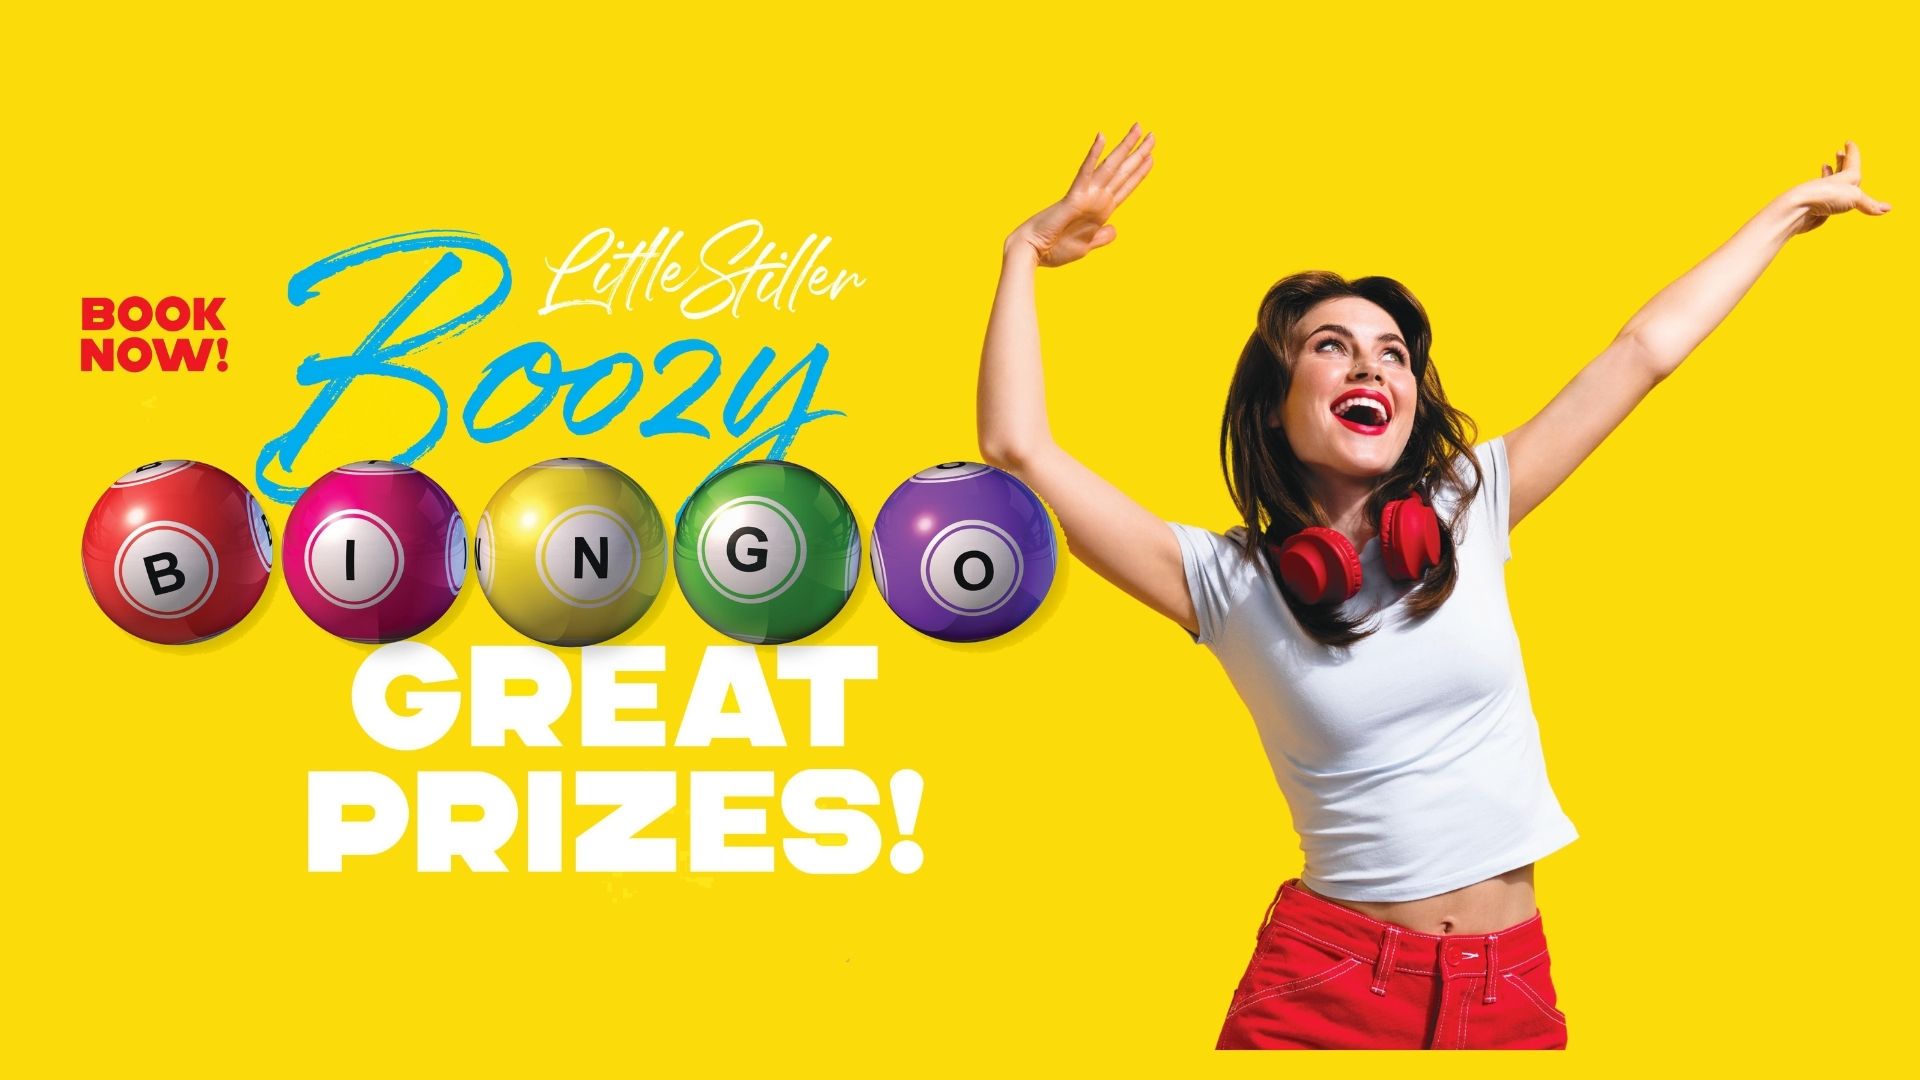 Little Stiller Boozy Bingo - Great Prizes!